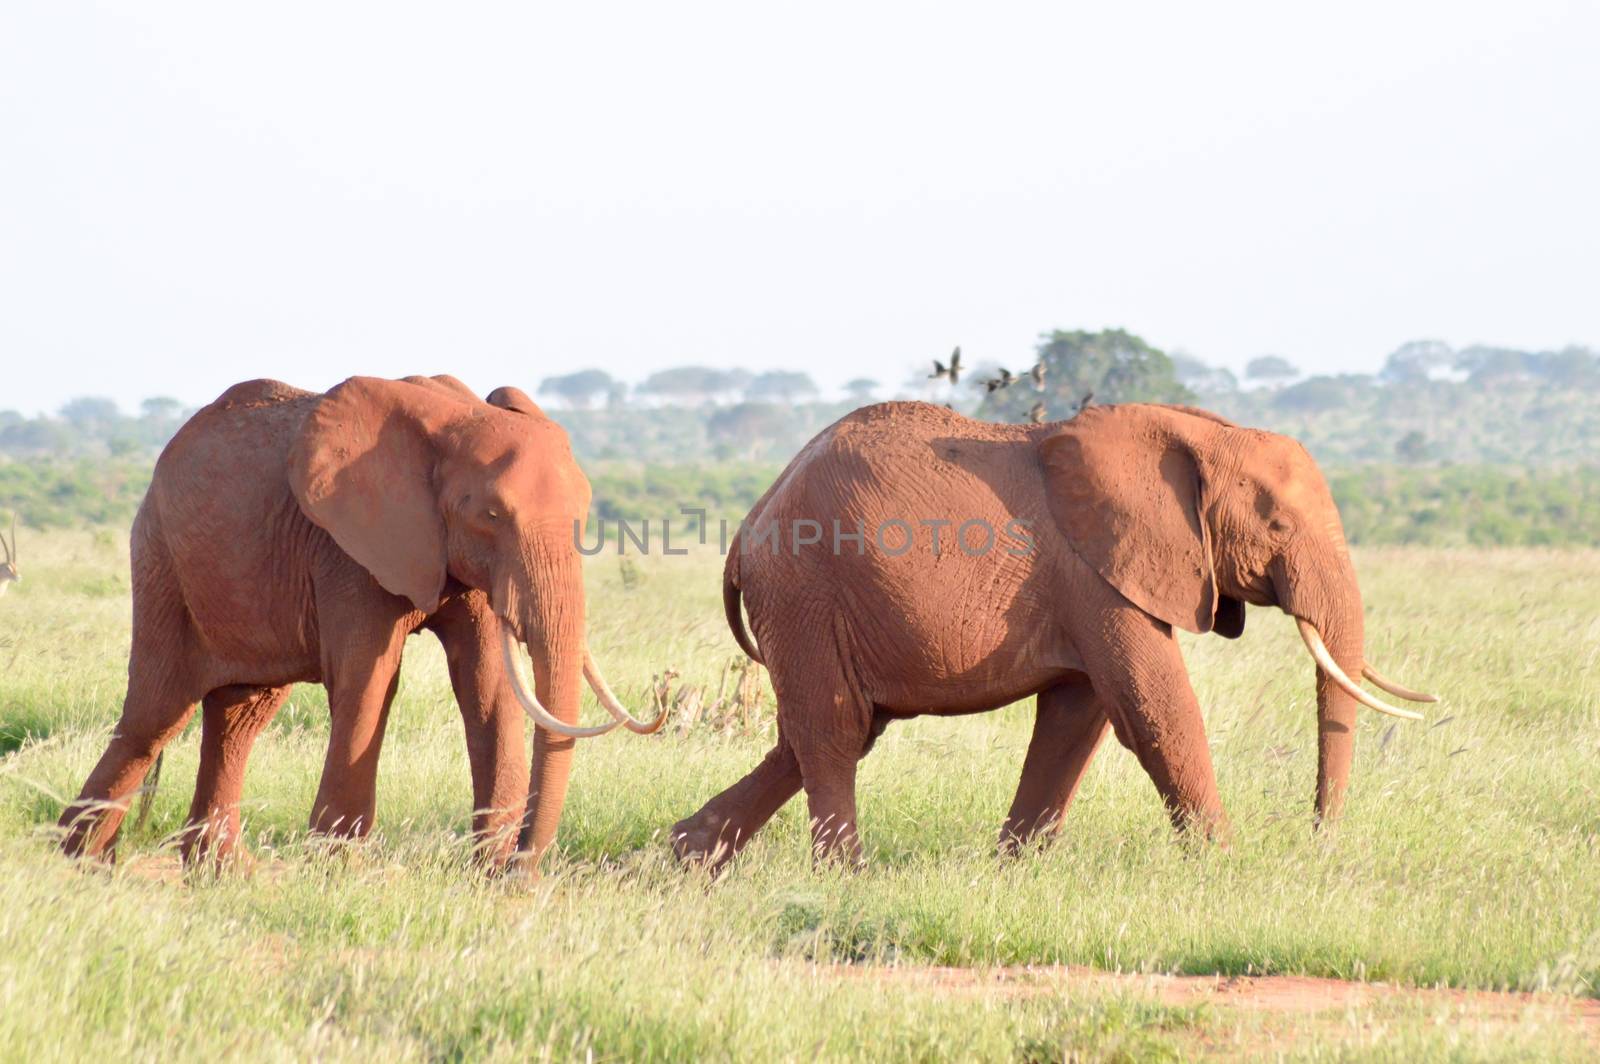 Two elephants walking by Philou1000